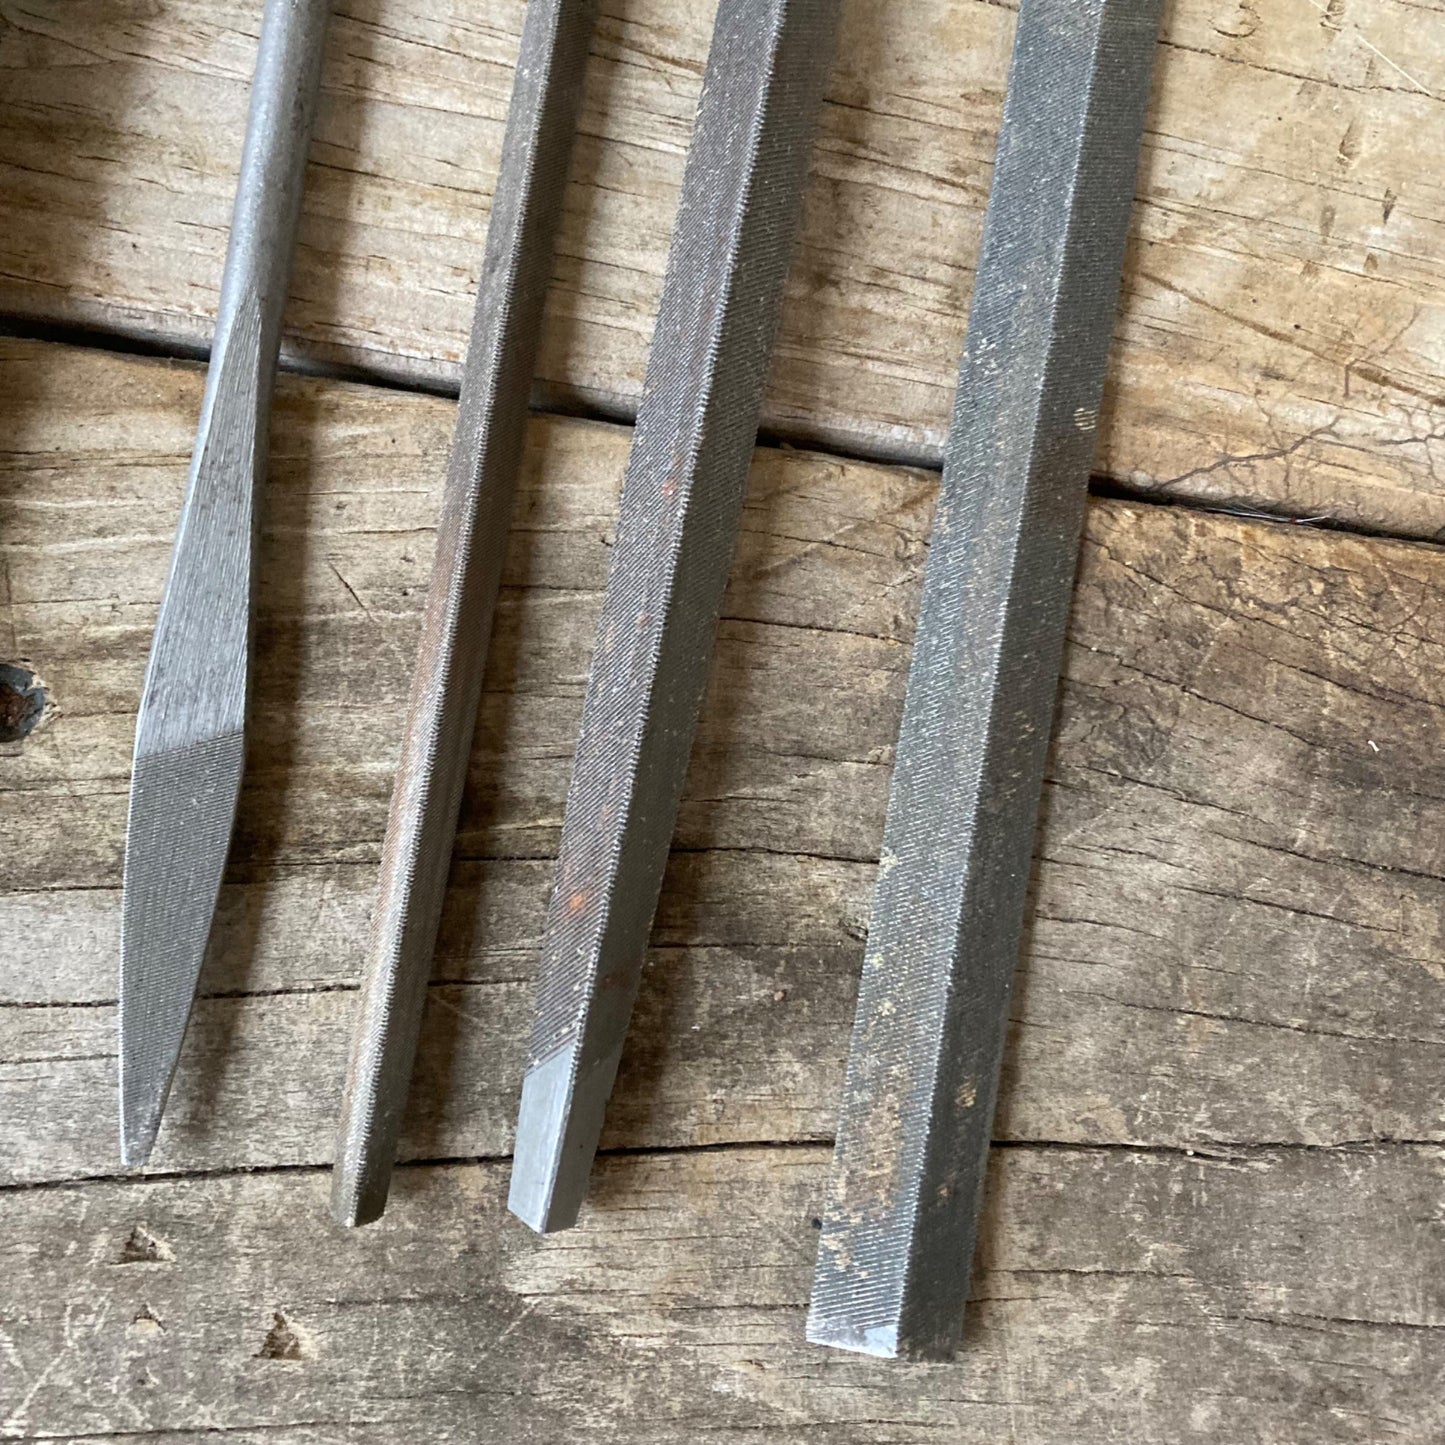 Lot 6 Vintage Hand Files Wood Metal Working Tools